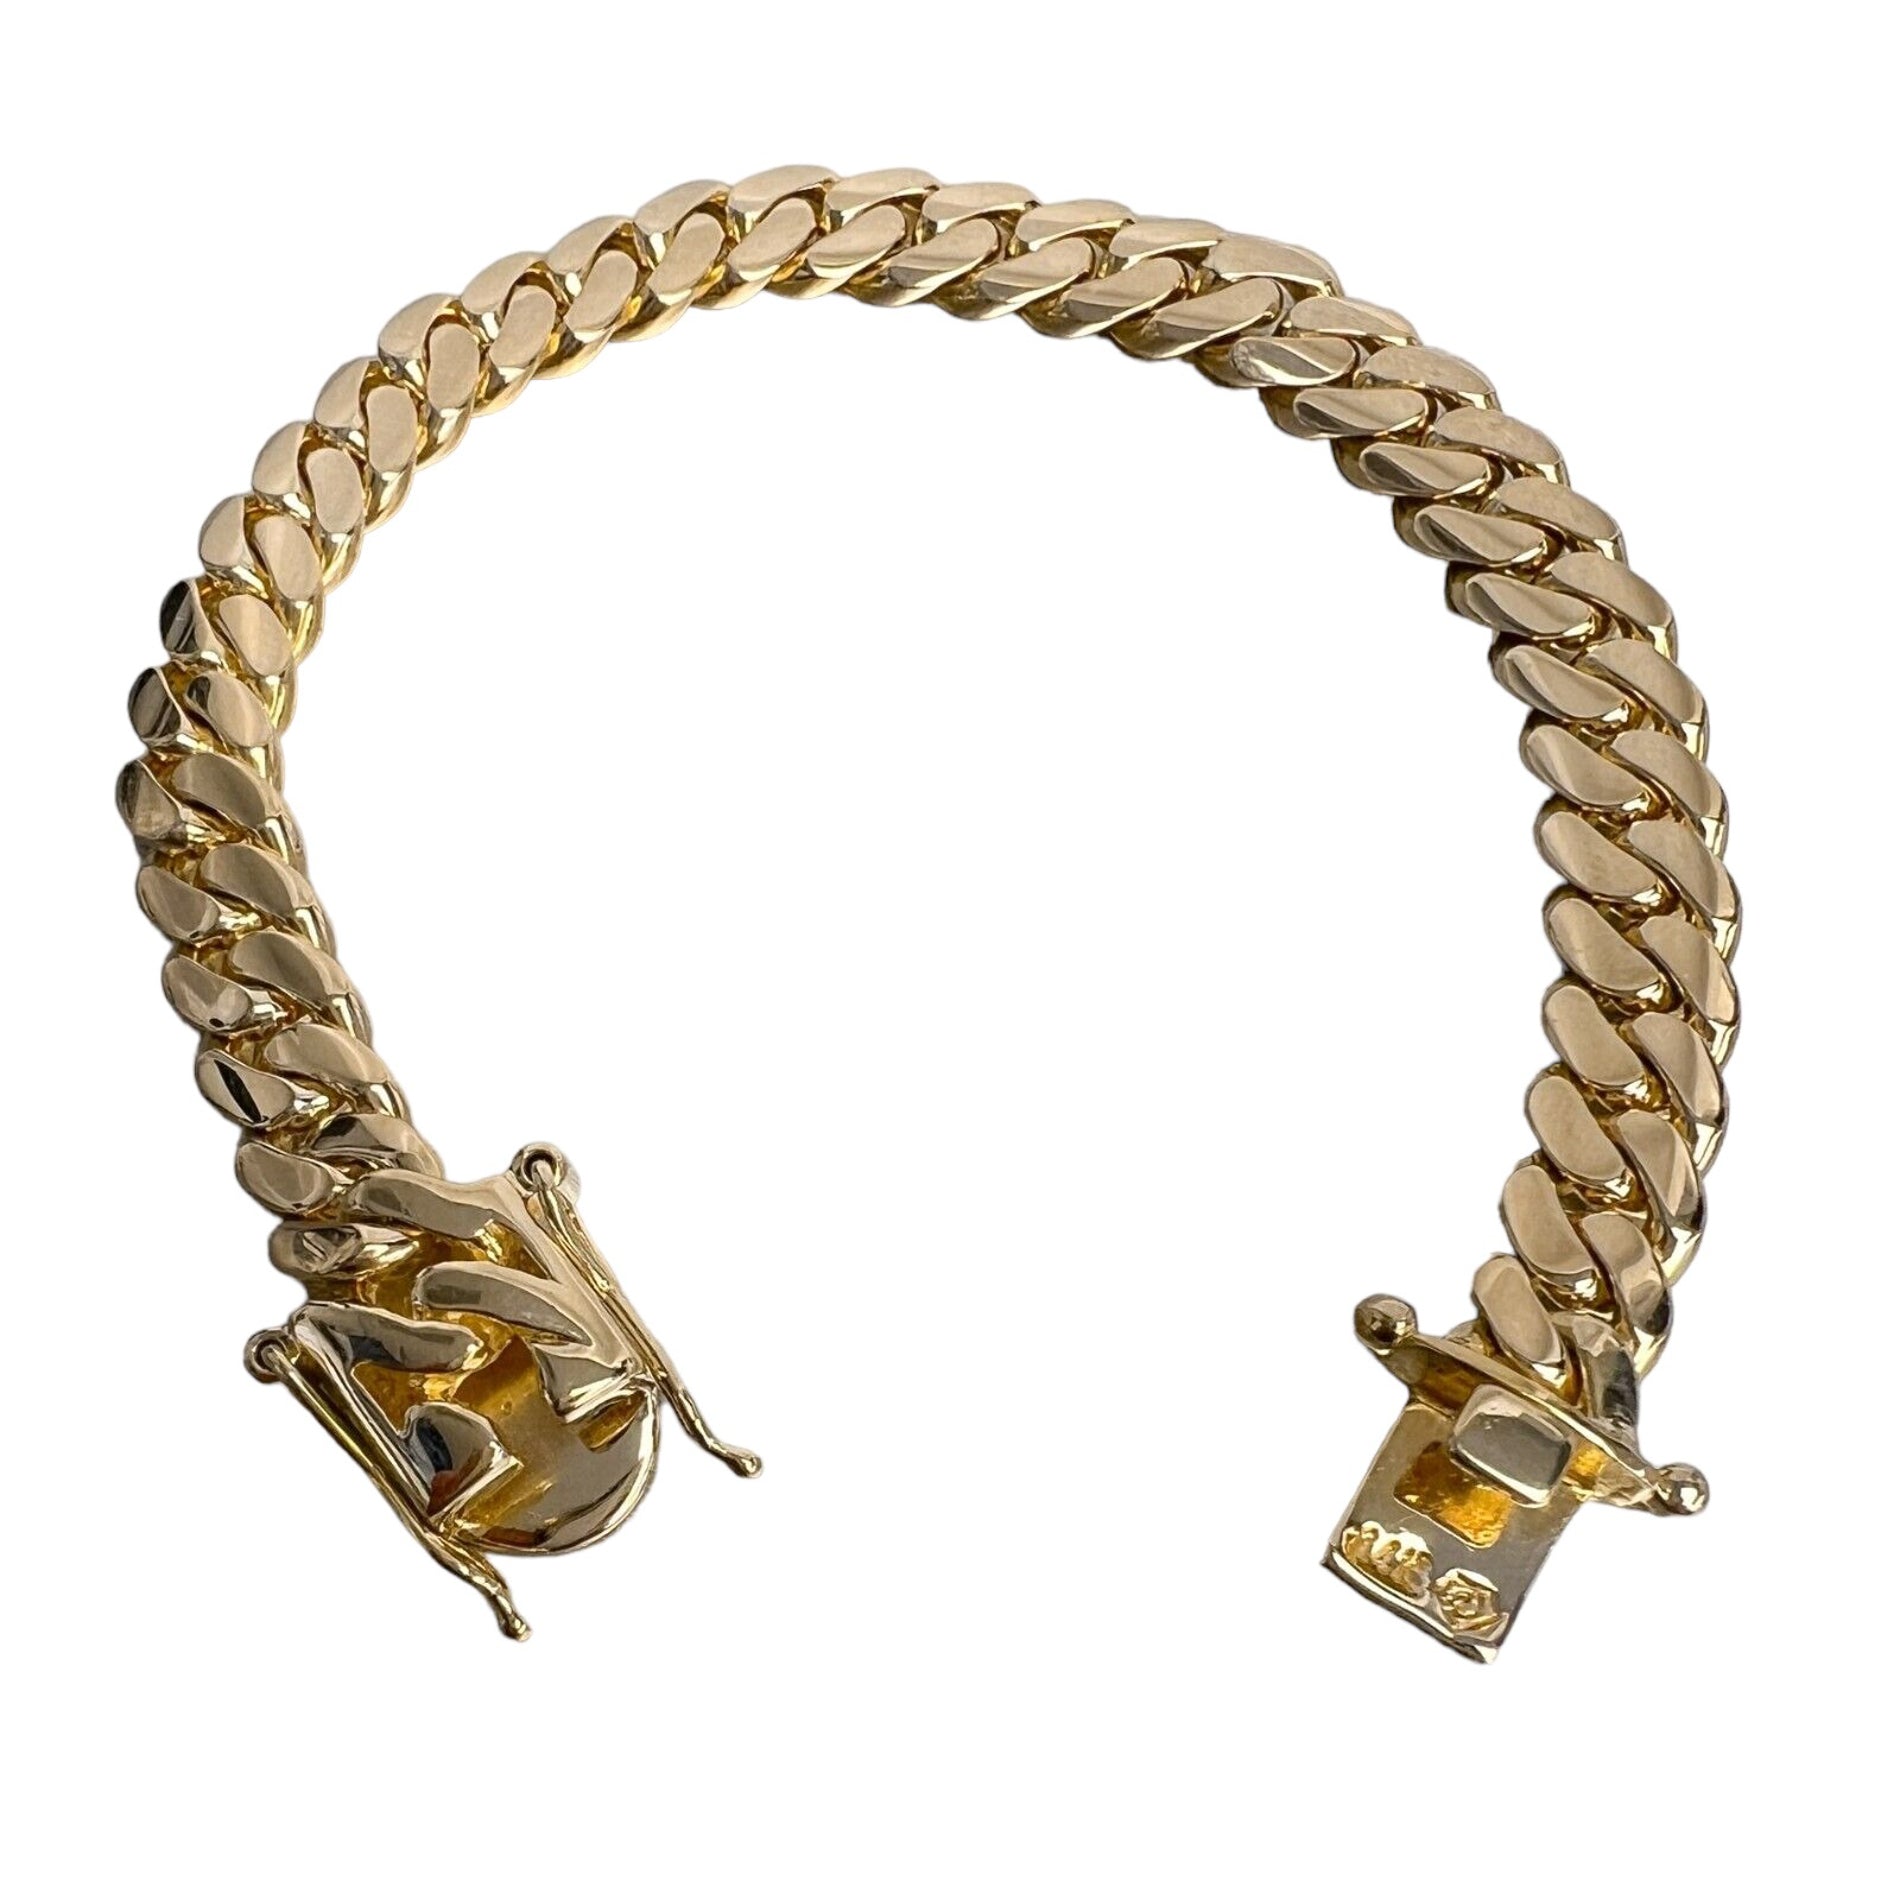 916 Gold 9mm Milo Bracelet (Box Clasp with Safety Chain) | Merlin Goldsmith